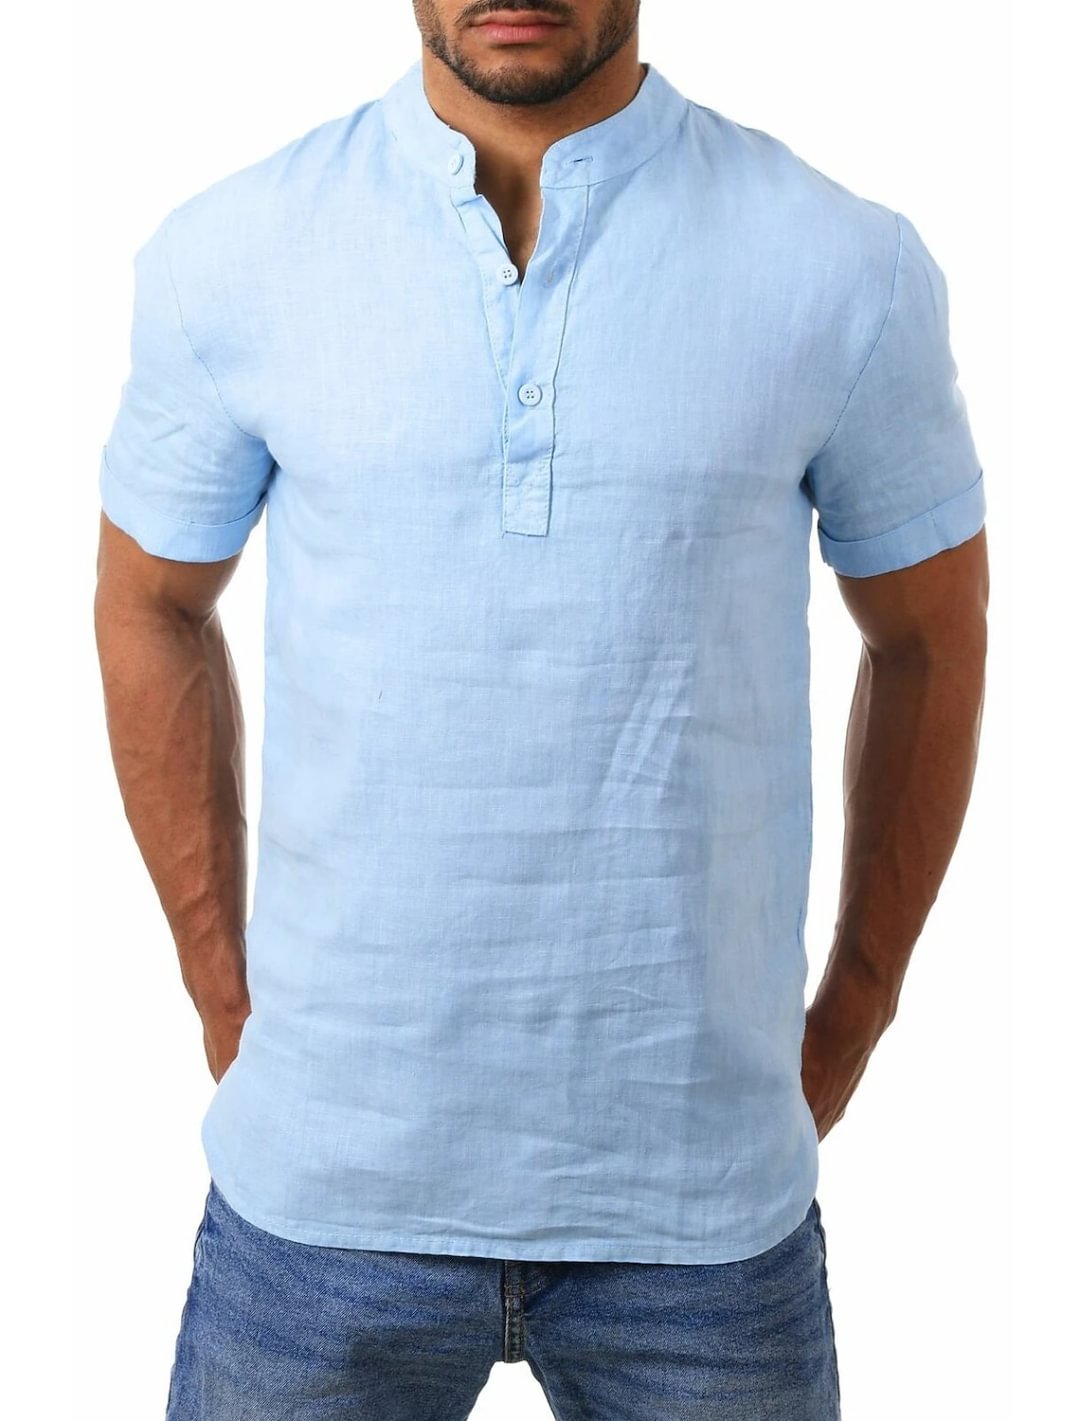 Men's Shirt Solid Color Short Sleeve Street Tops Cotton Lightweight Casual / Sporty Breathable Henley Light Blue khaki White / Beach-Corachic